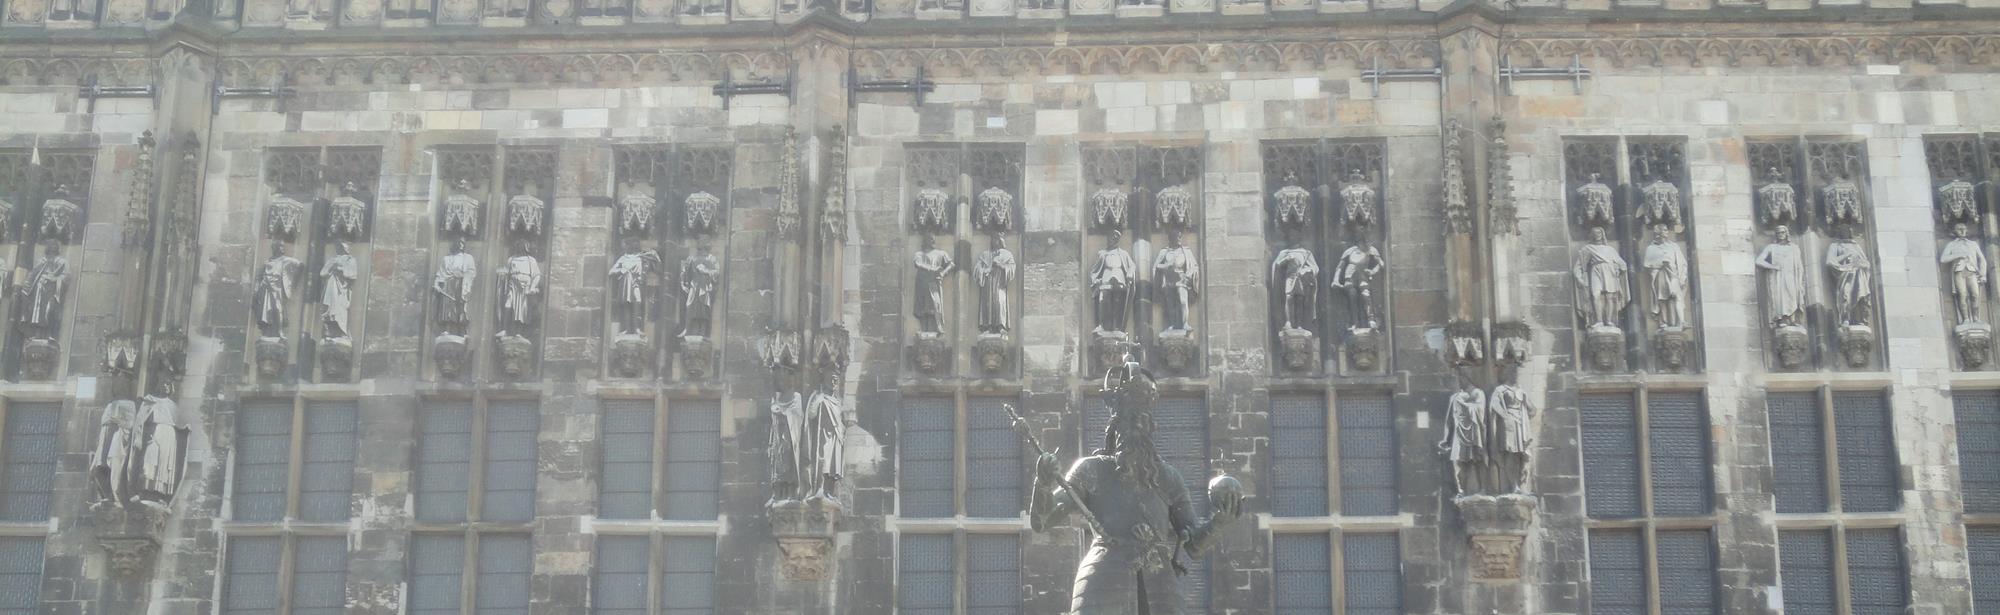 Standbeeld Karel de Grote